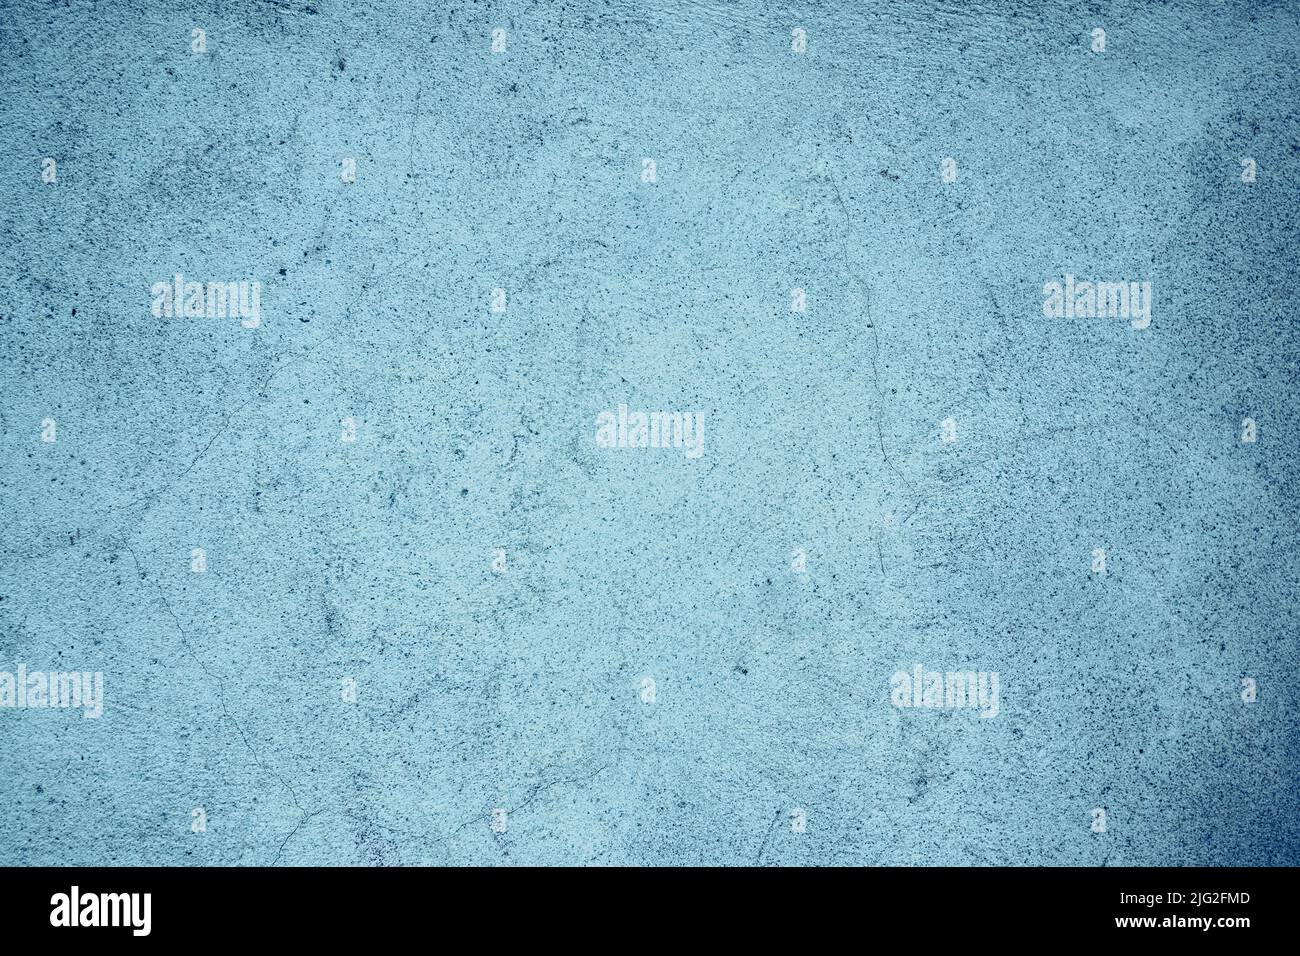 Blue vintage texture. High resolution grunge background. Stock Photo